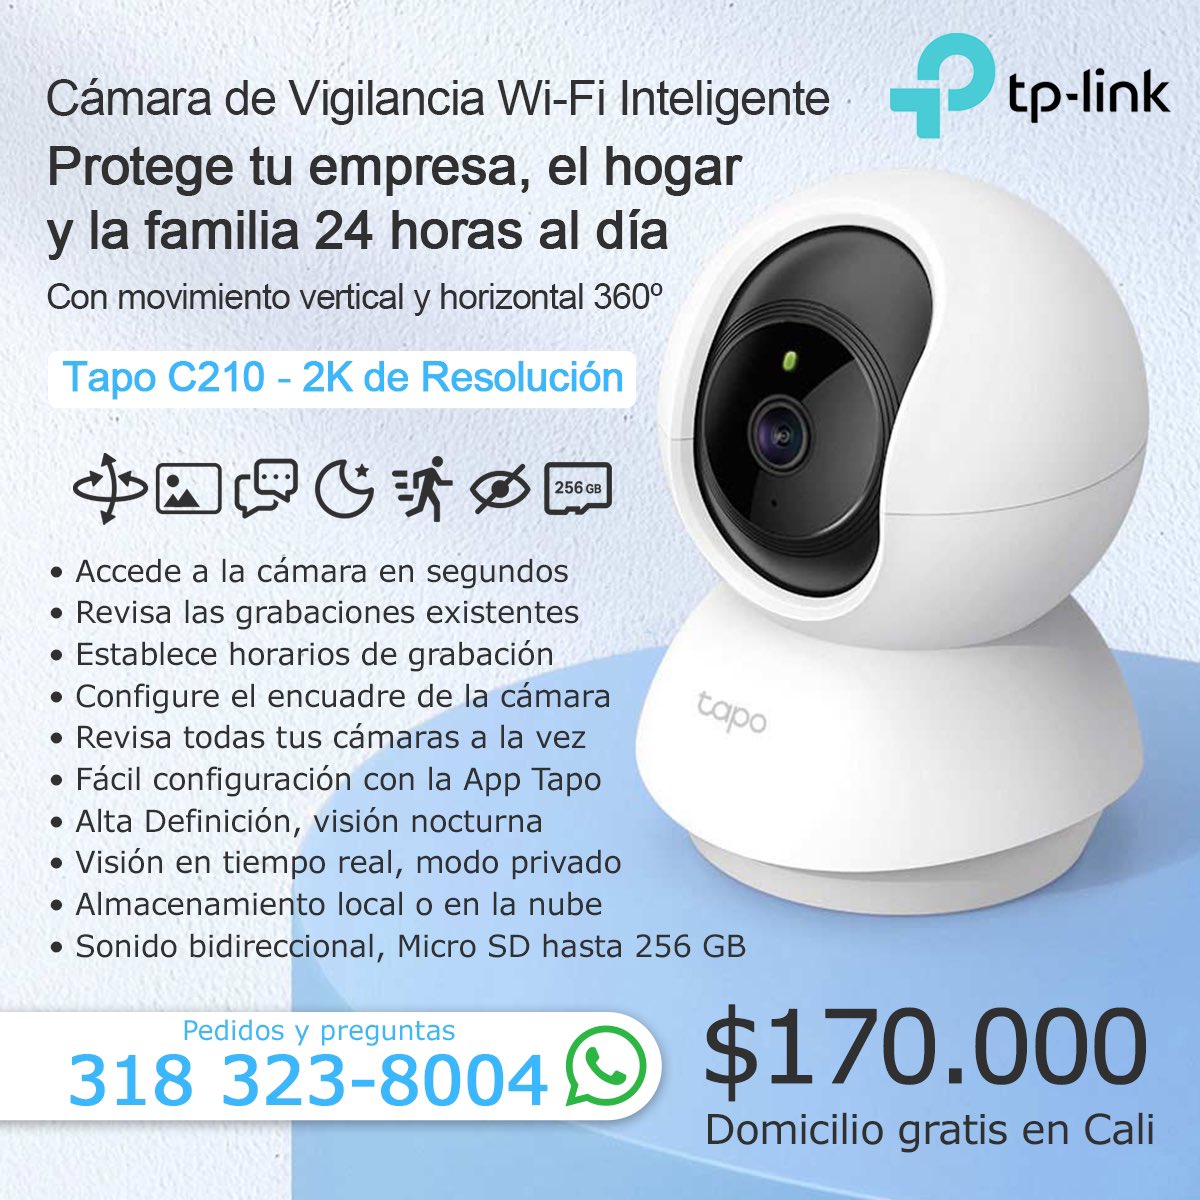 Camara Wi-Fi de vigilancia Tapo C210 Tp-Link